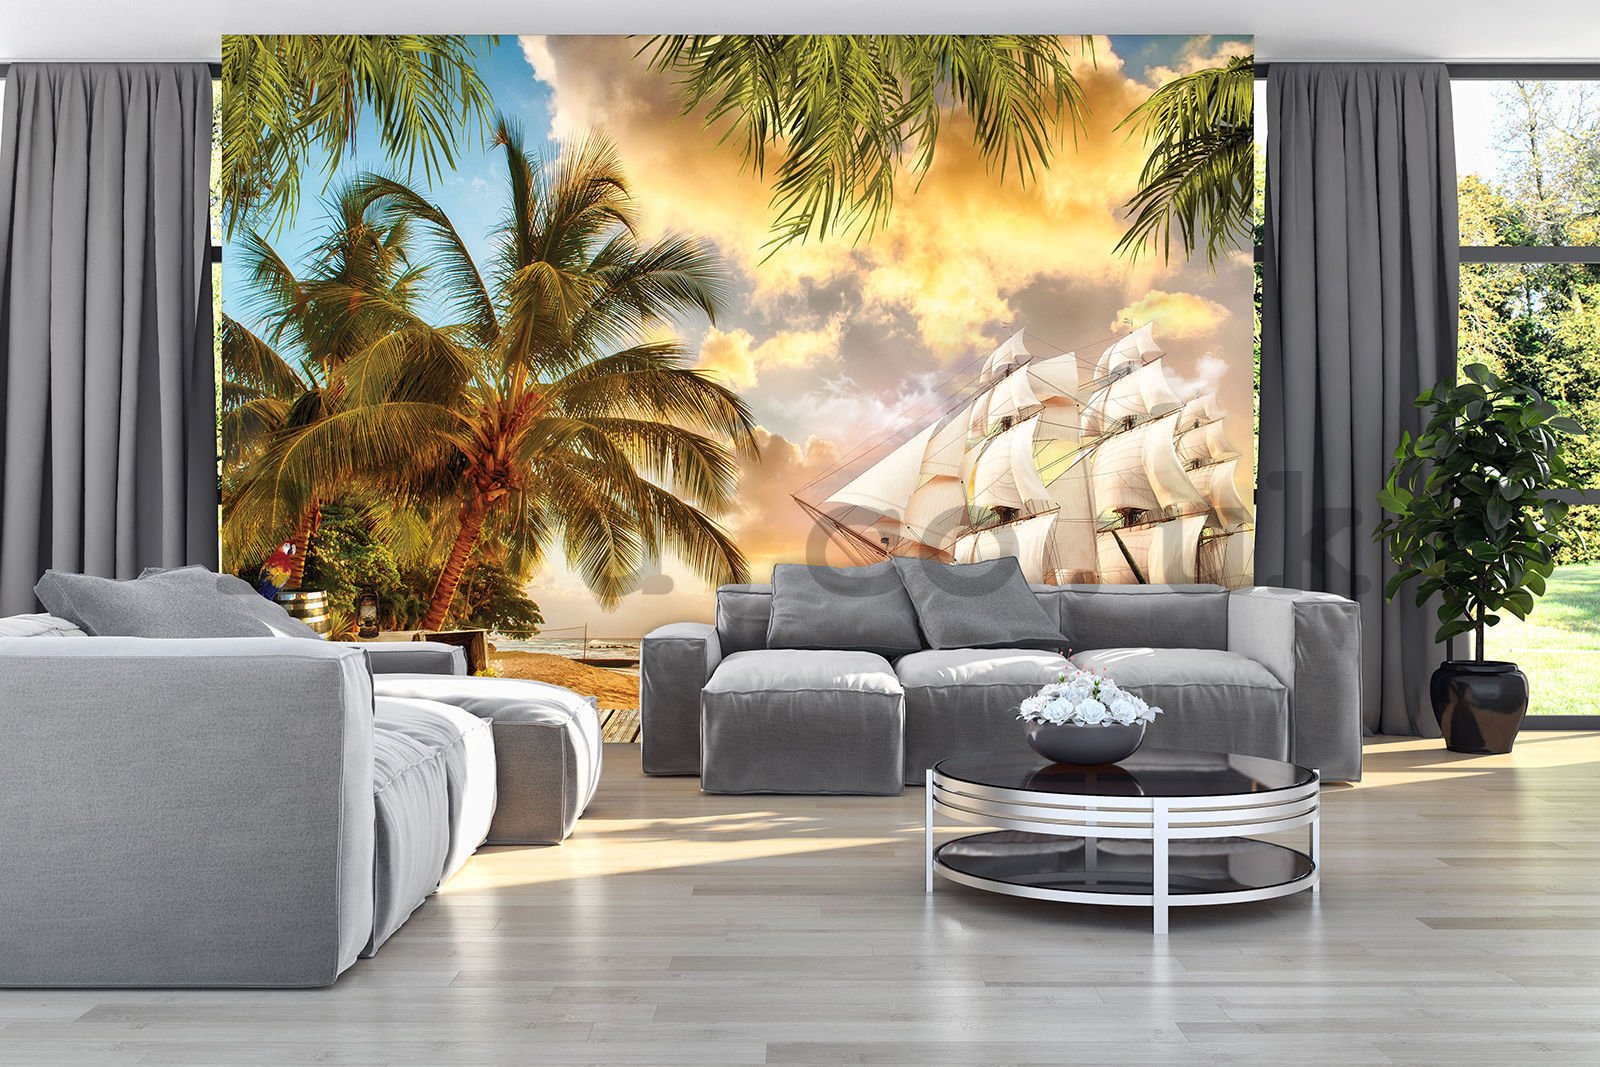 Wall mural vlies: Sailboat in paradise - 254x368 cm